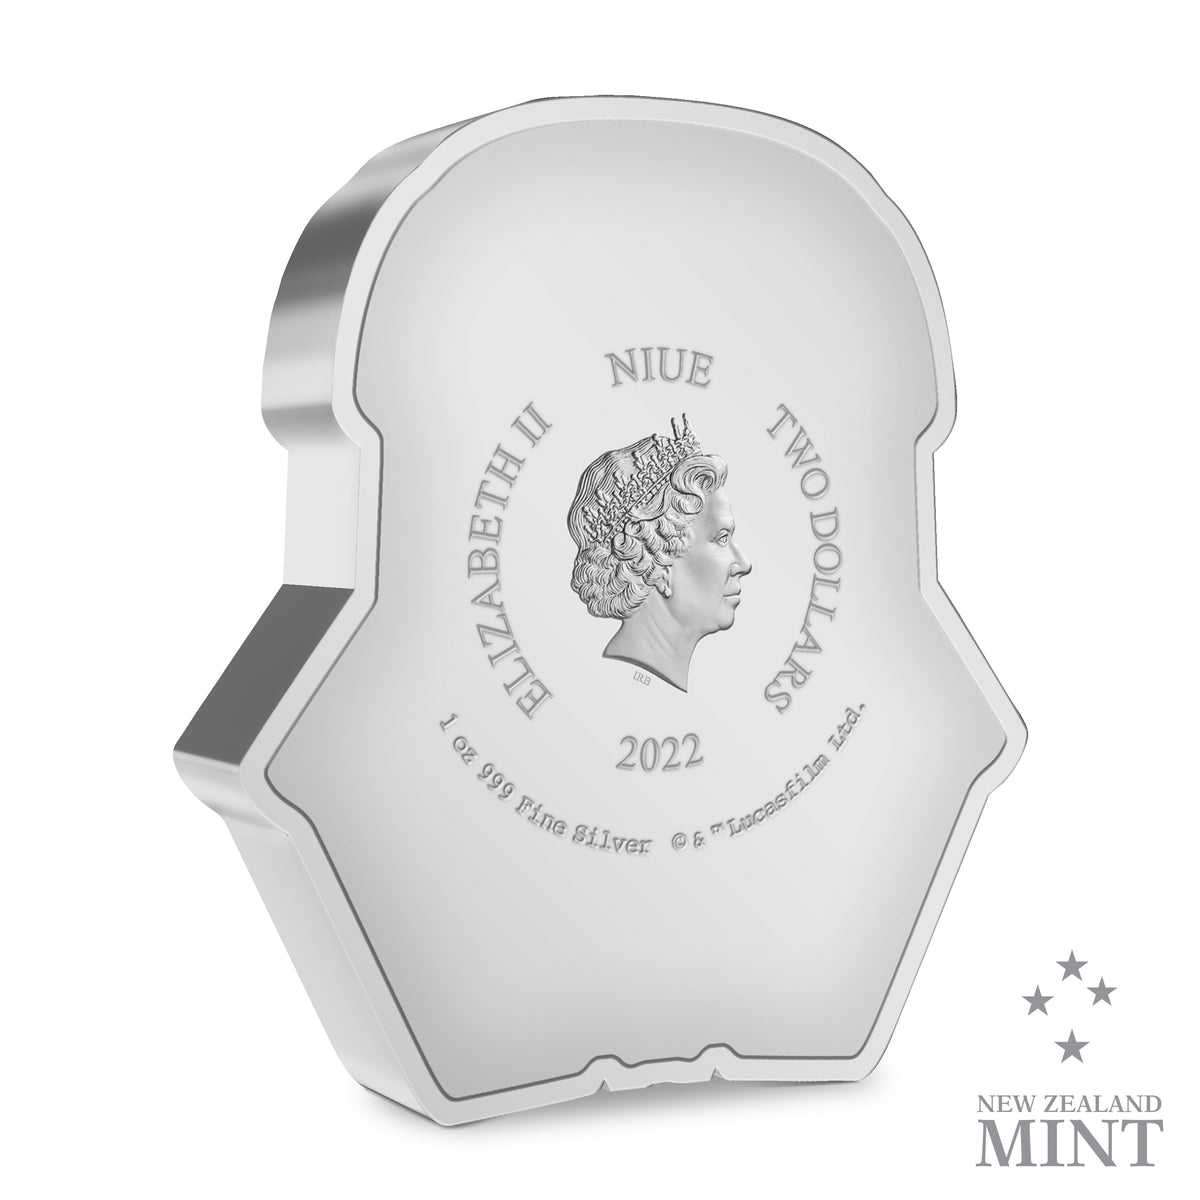 Niue Mint 2022 Faces of the Empire Hovertank Pilot 1 oz Silver Coin